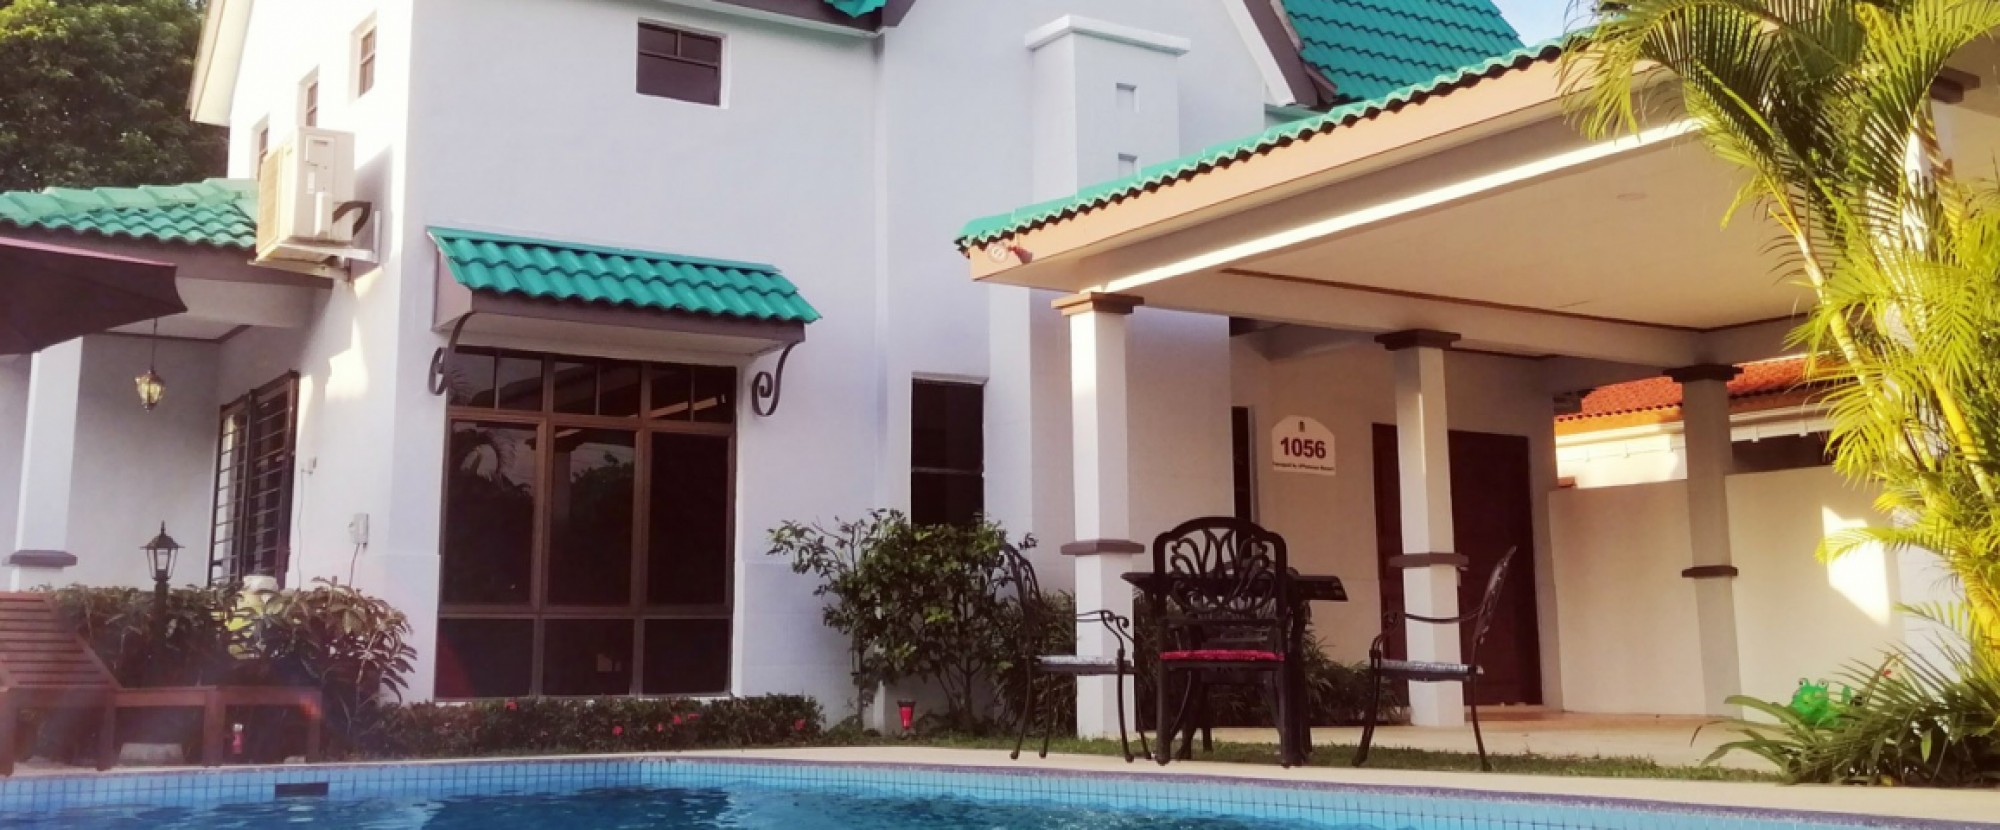 A Famosa Villa - 2D1N Stay @ Villa with Pool | Malacca ...